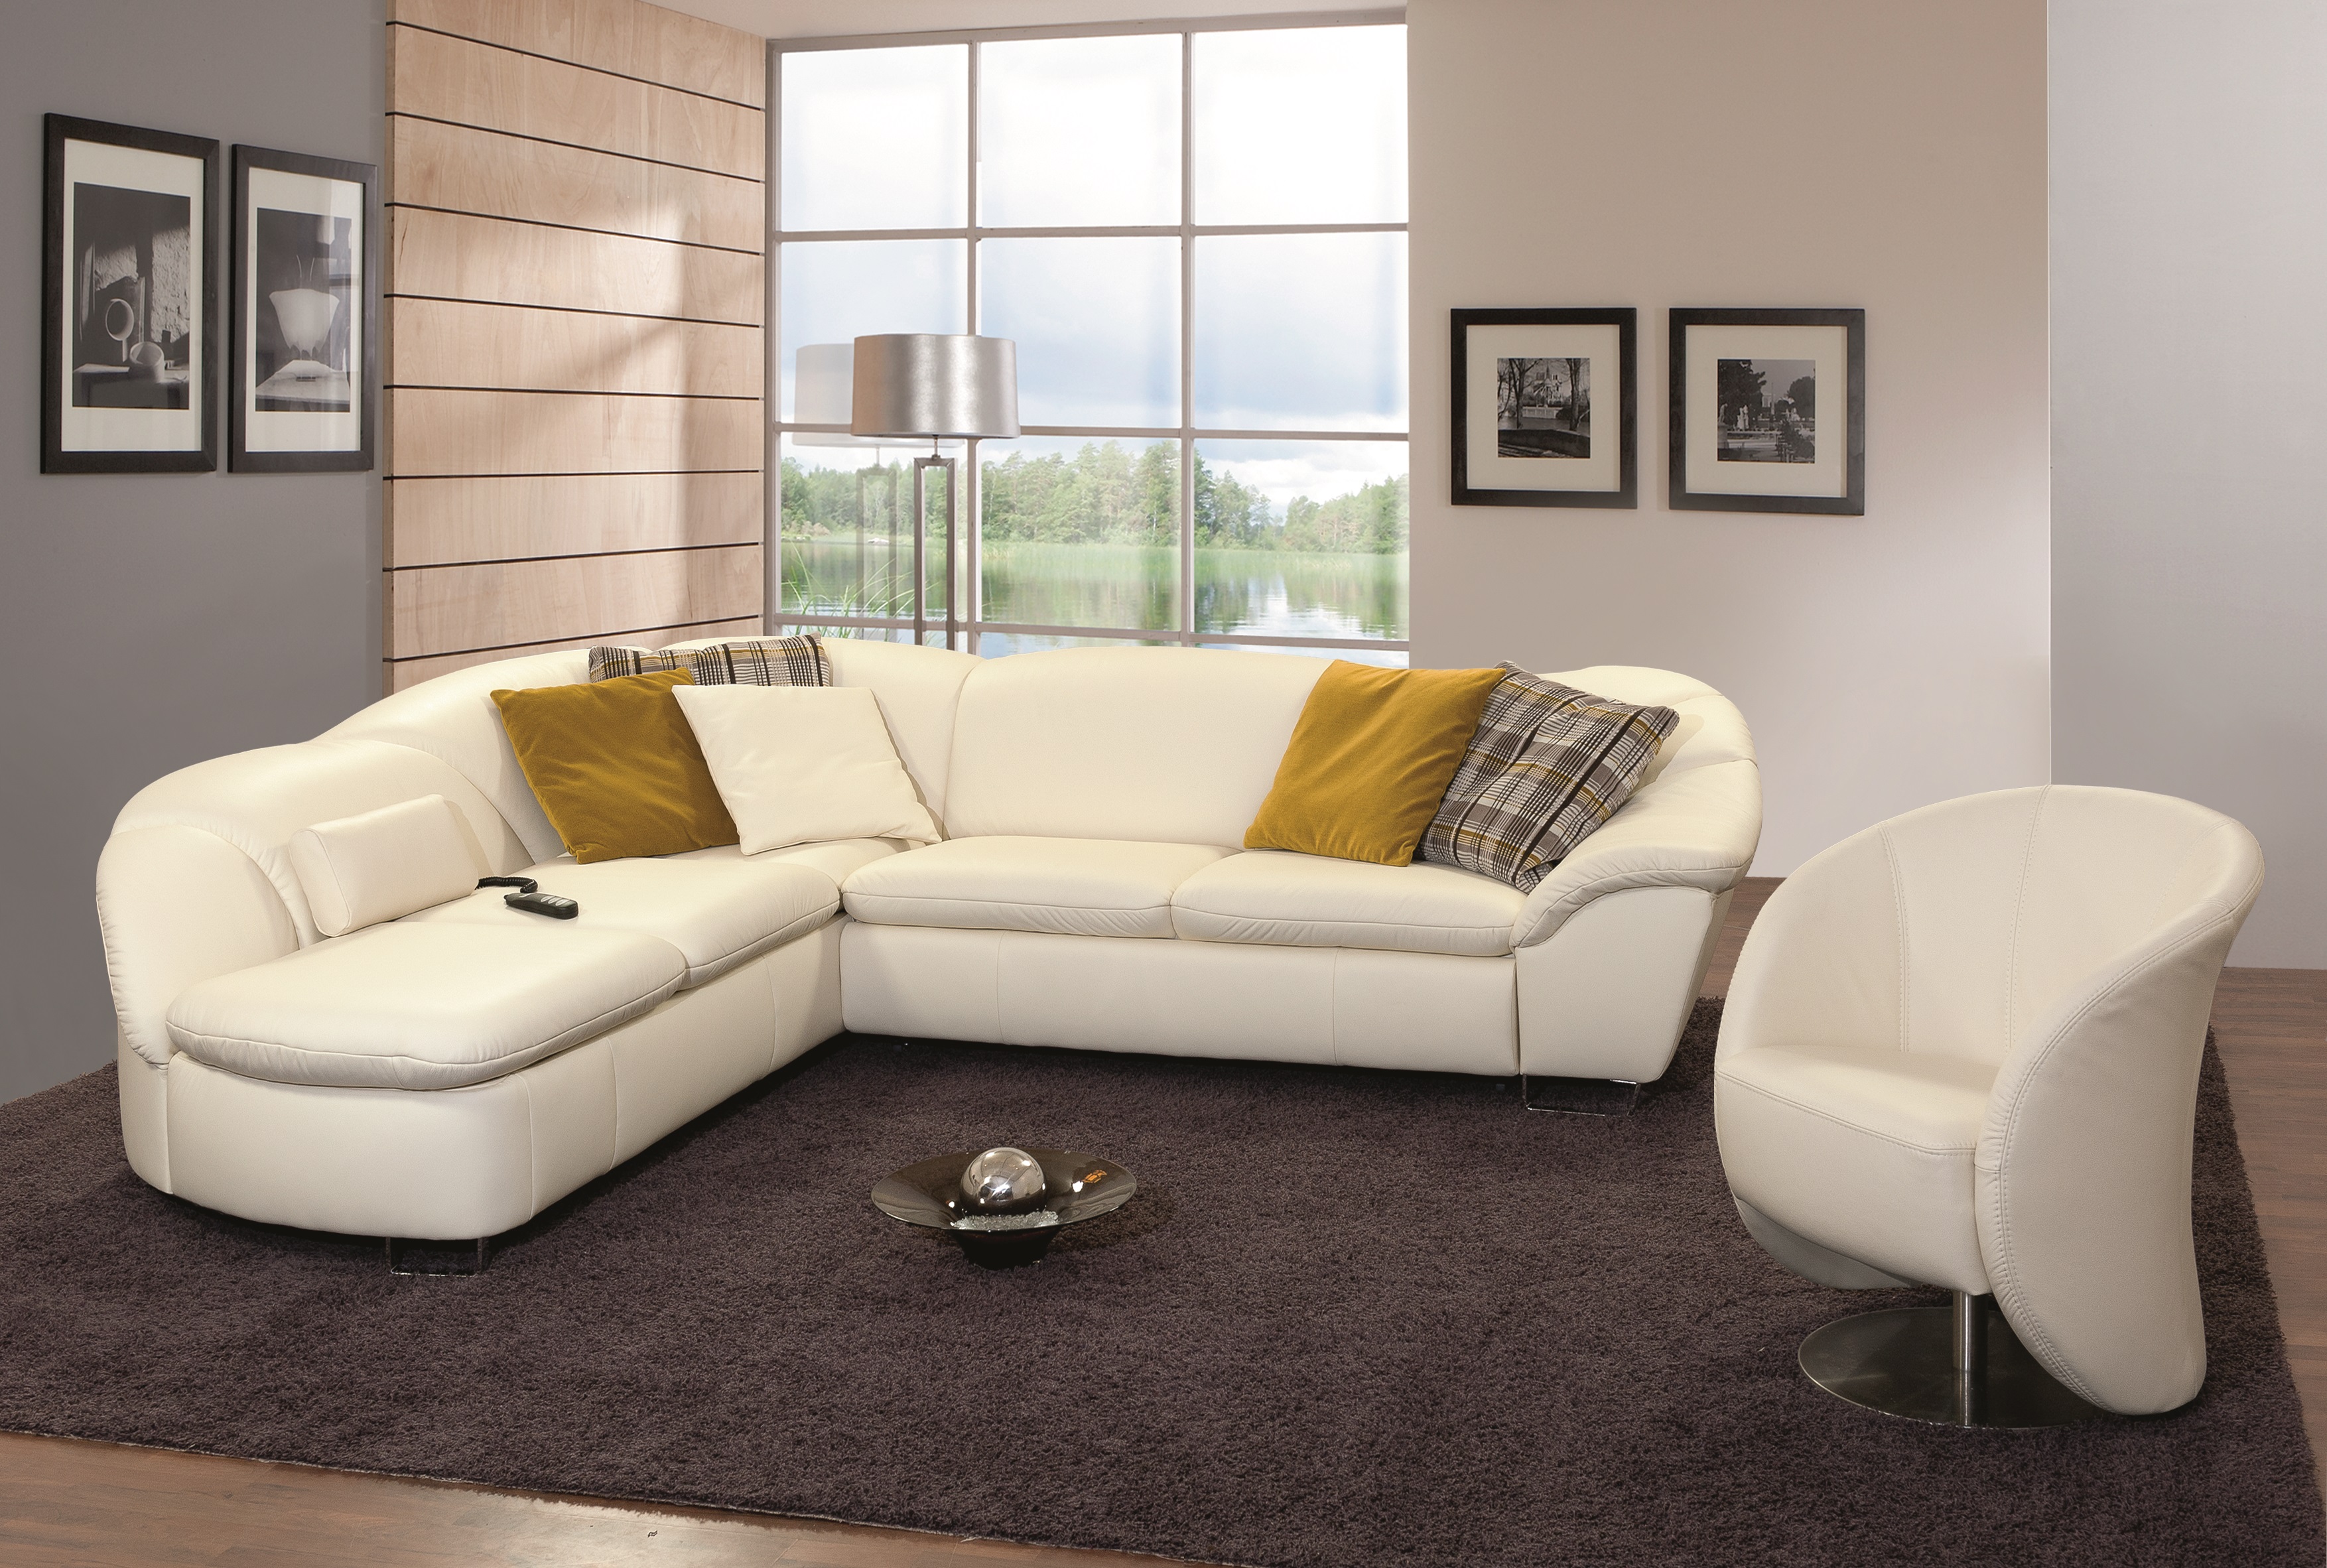 Белый кожаный диван